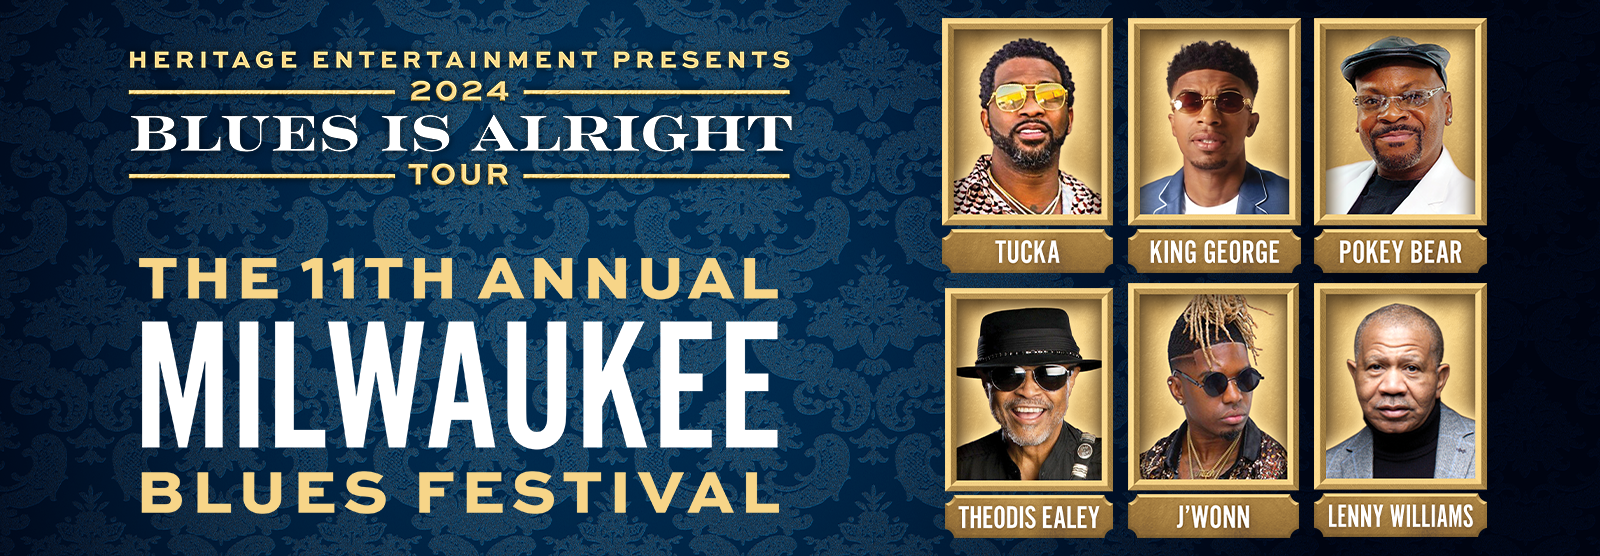 The 11th Annual Milwaukee Blues Festival